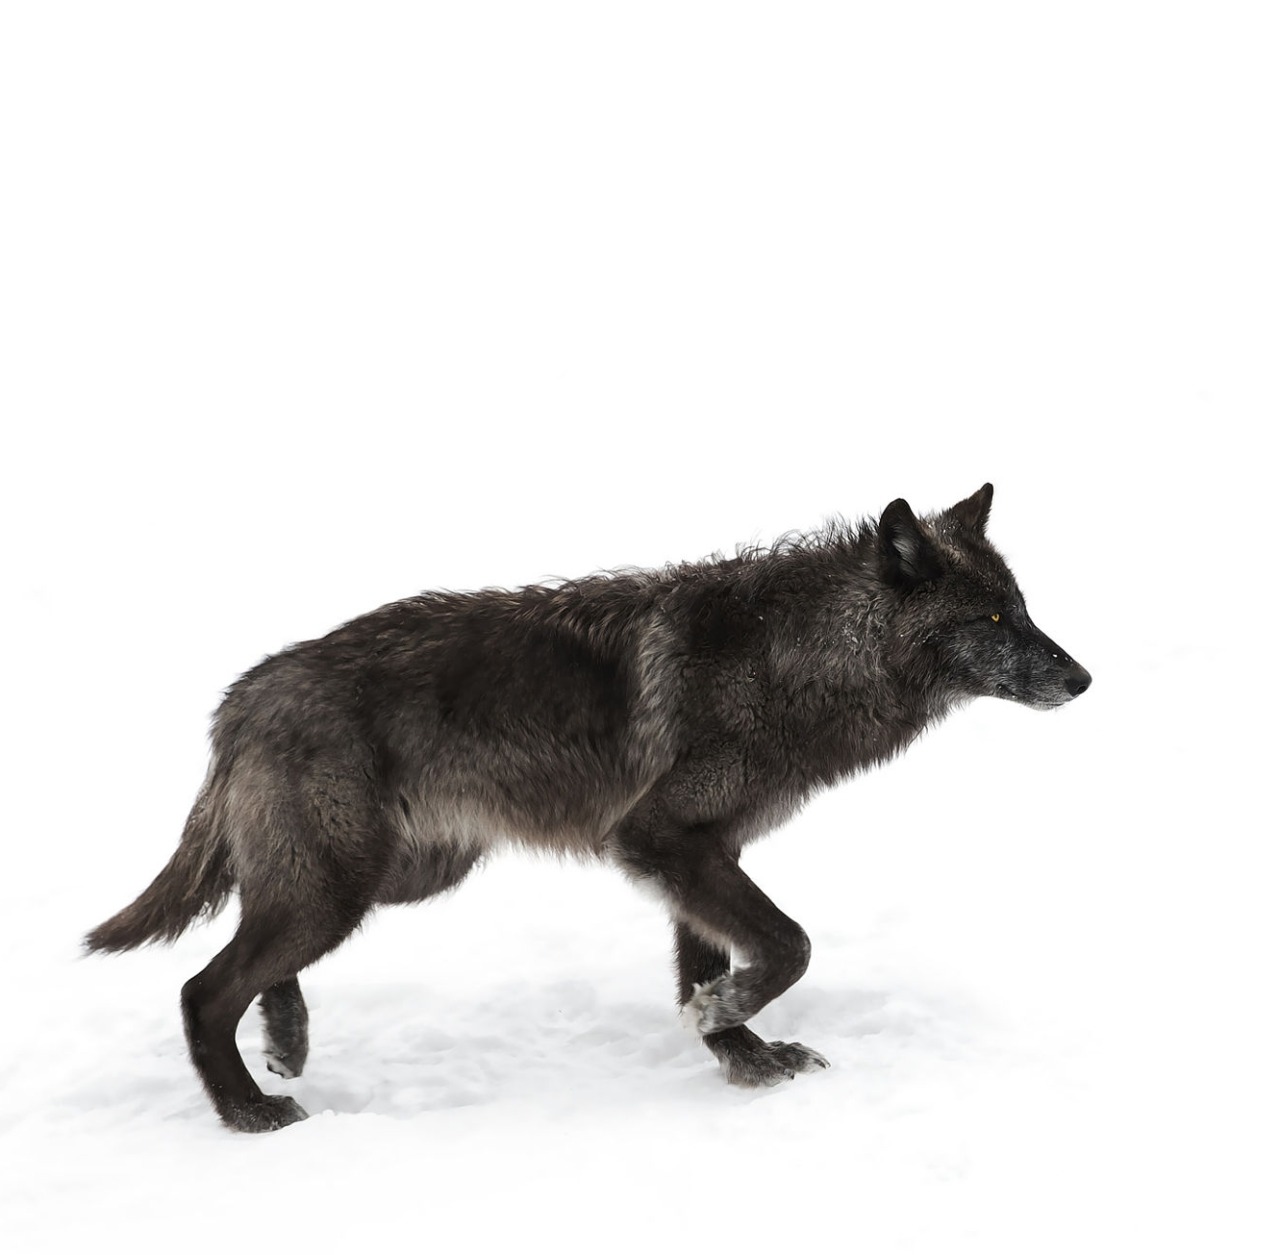 beautiful-wildlife:
“Black Wolf by Jim Cumming
”